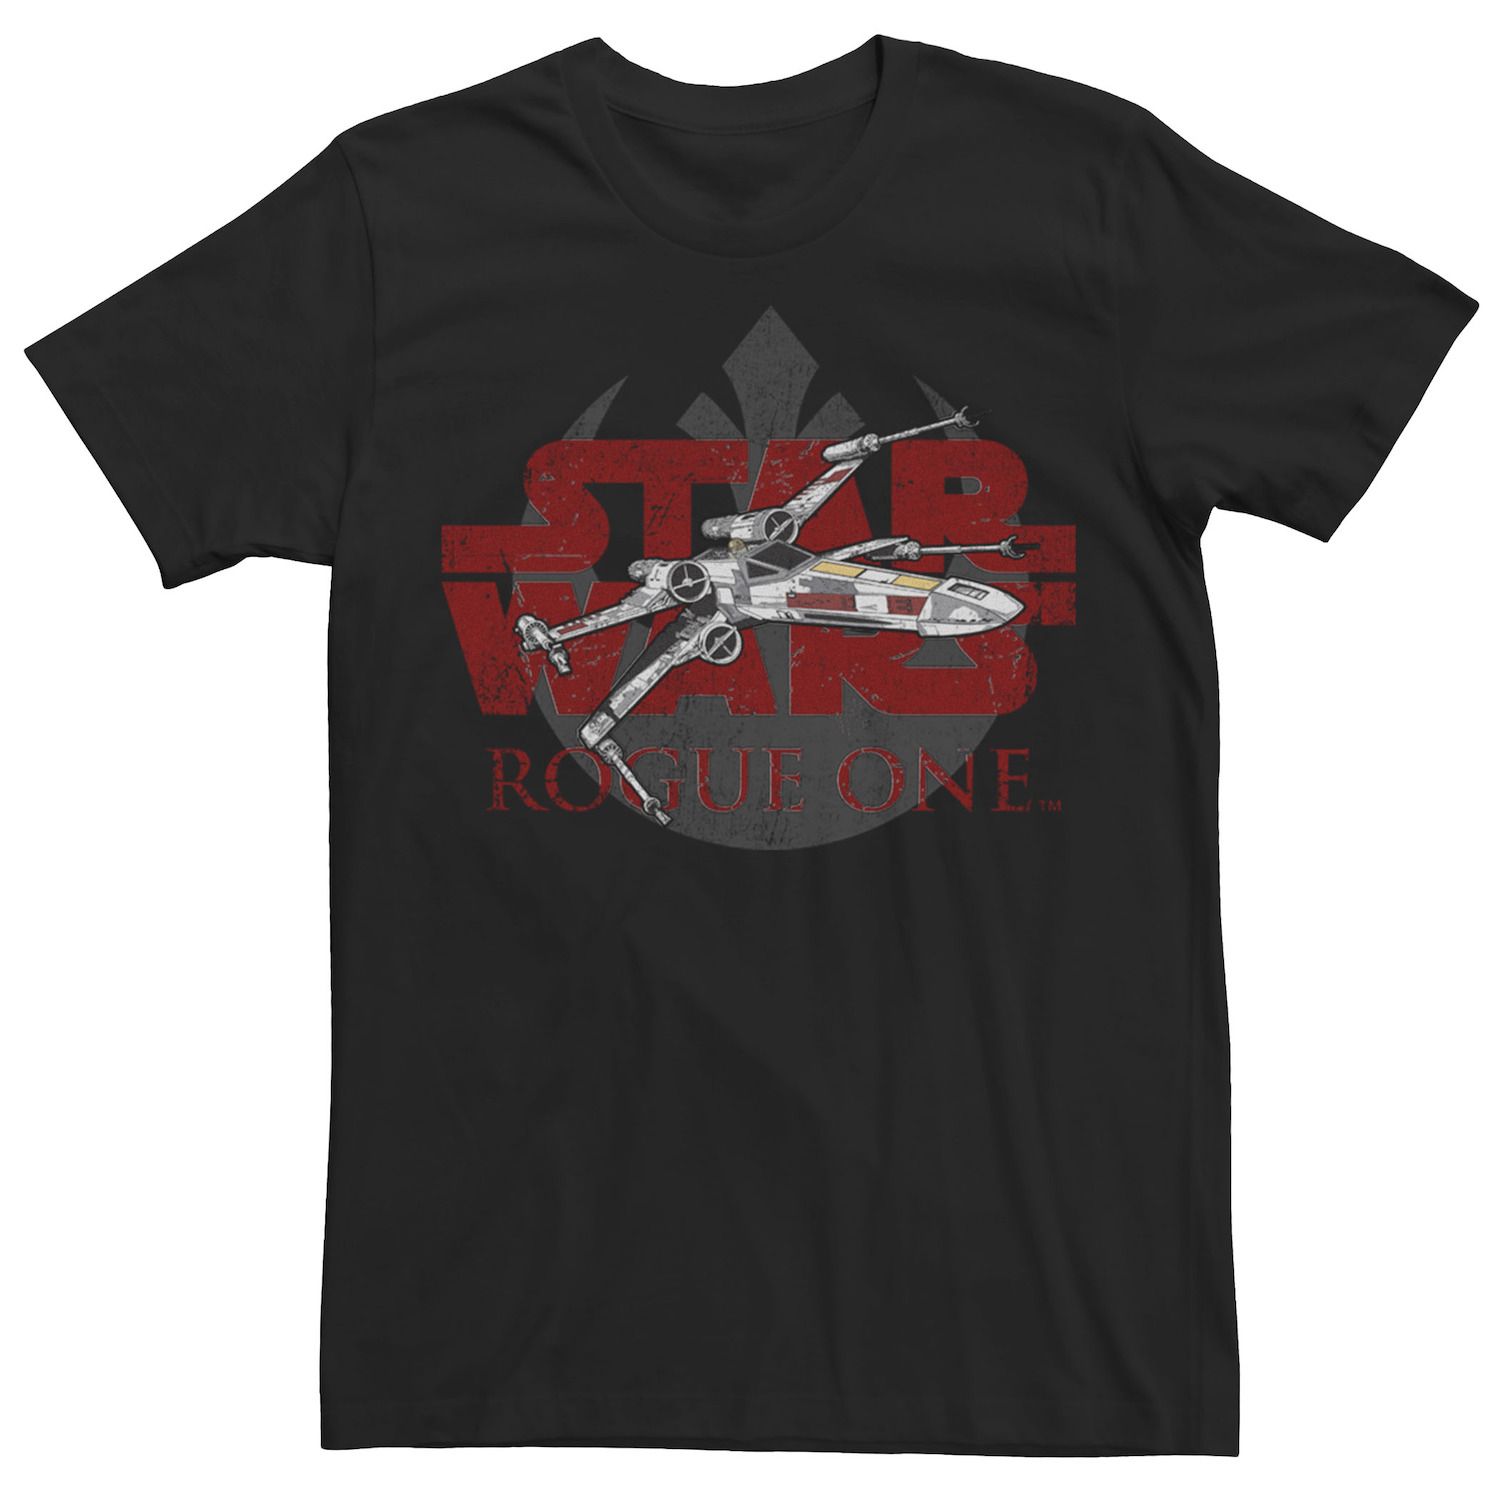 Мужская футболка с логотипом Rogue One Alliance Starbird Star Wars мужская красная футболка с логотипом rogue one rogue one star wars